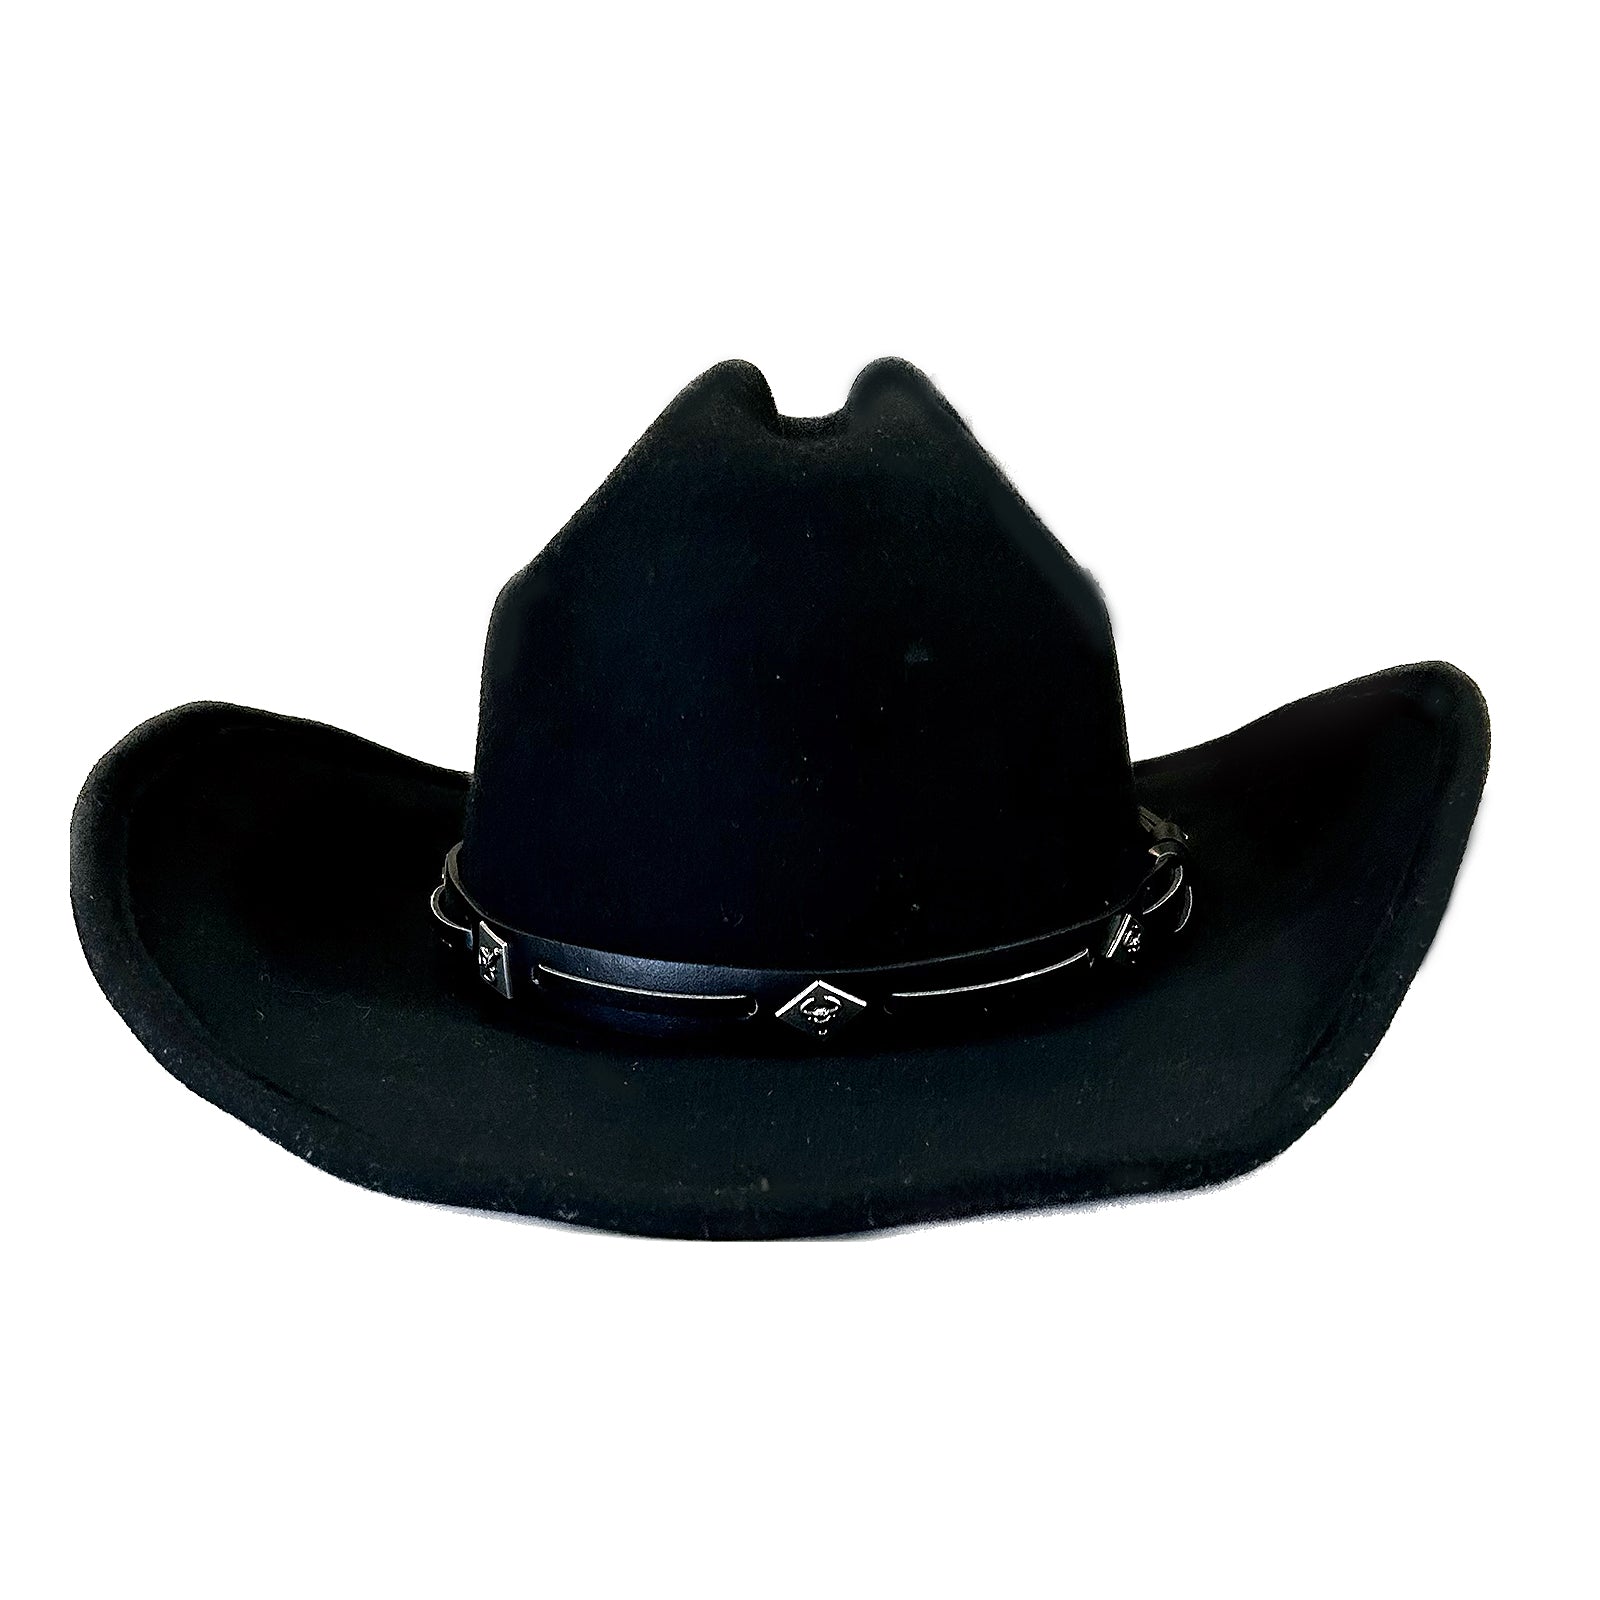 Black Wool Felt Western Cowboy Hat with Faux Leather Band